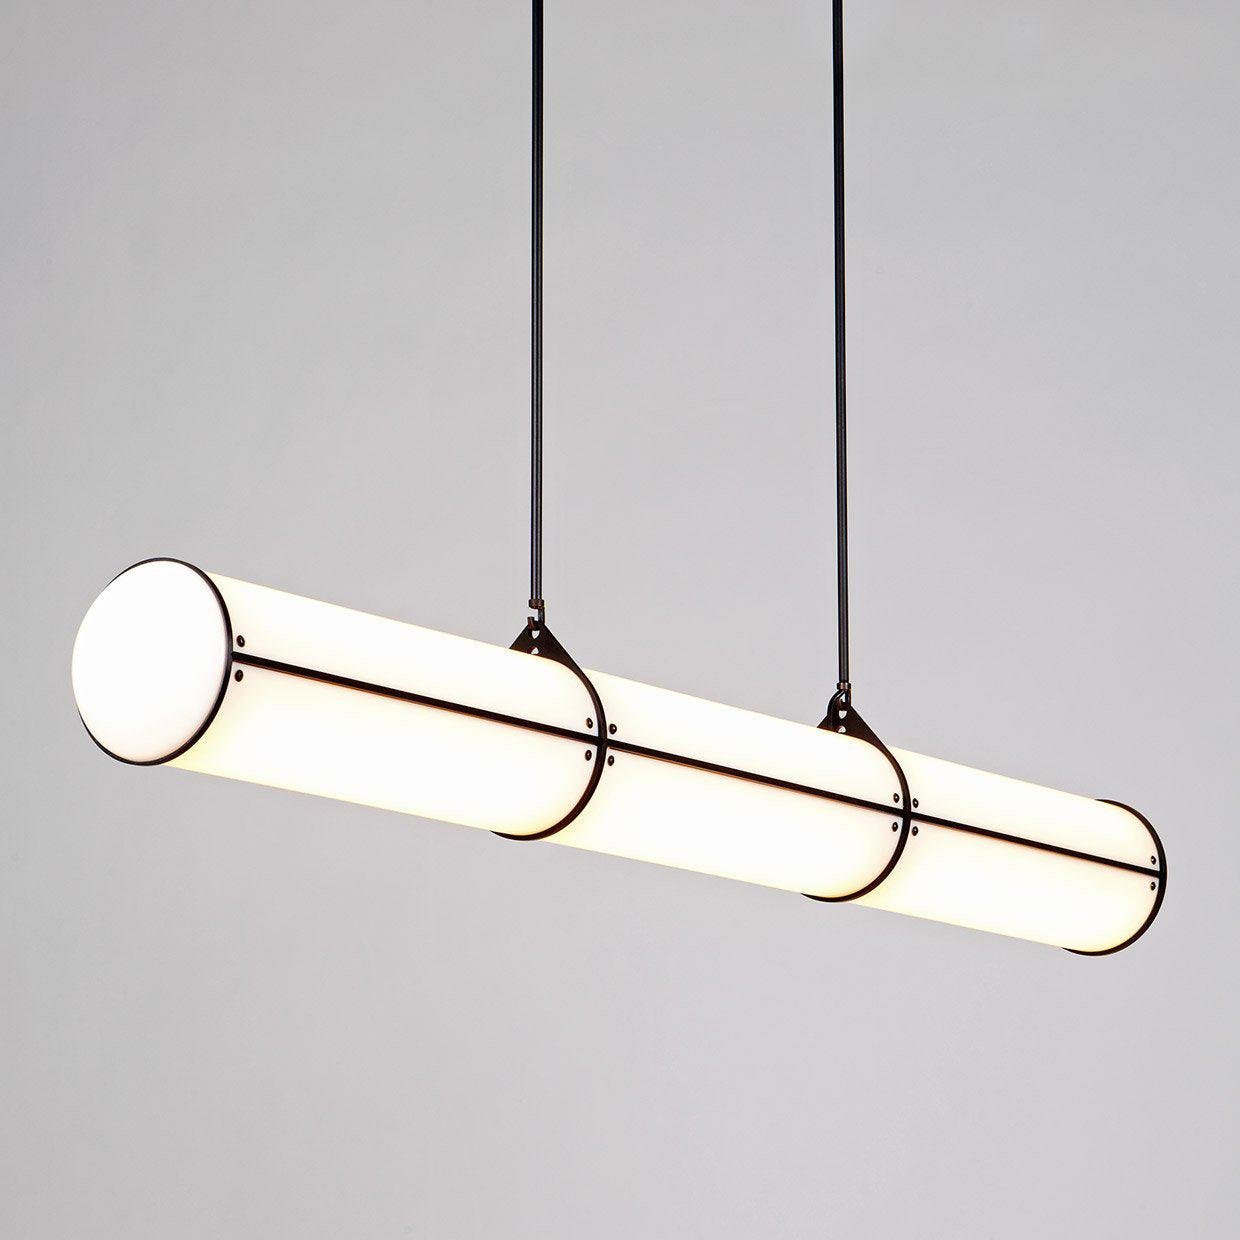 Black Pendant Light with endless straight design, measuring Ø 39.4" x H 35" (Ø 100cm x H 89cm). Emitting warm white light.